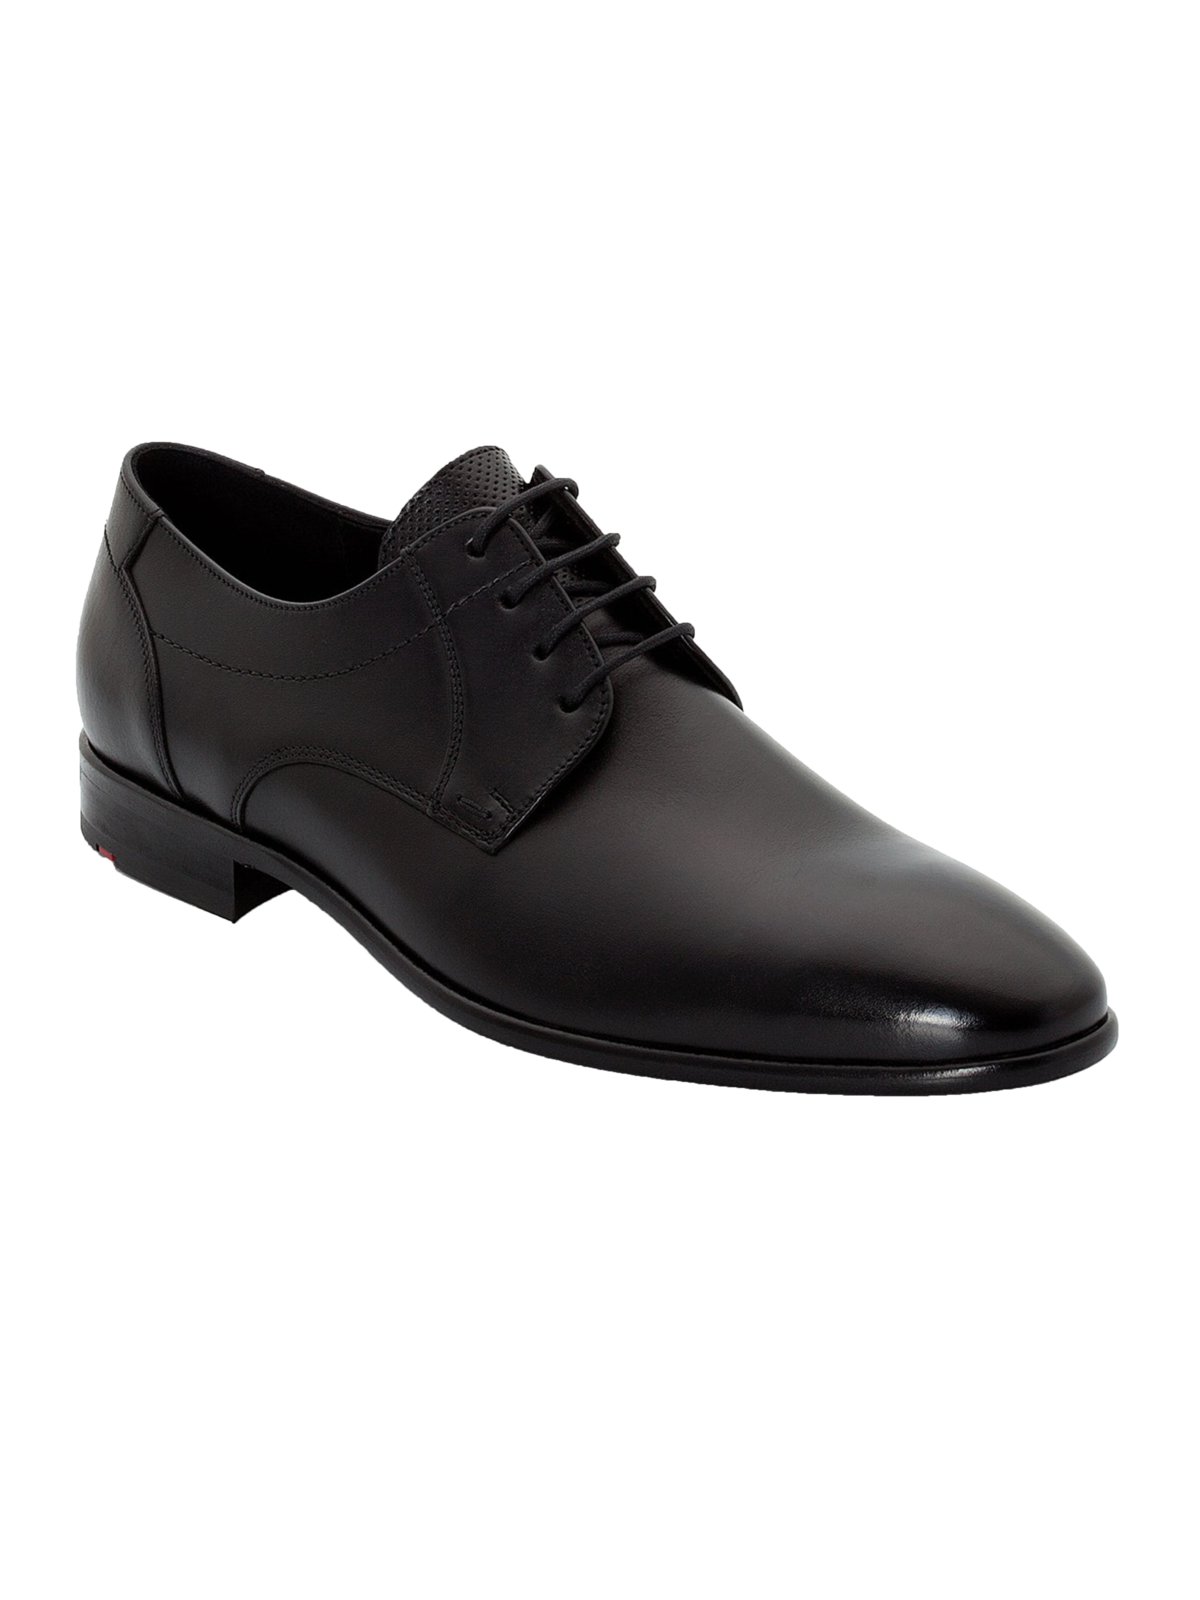 Lloyd Klassische Derby-Schuhe mit Ledersohle product